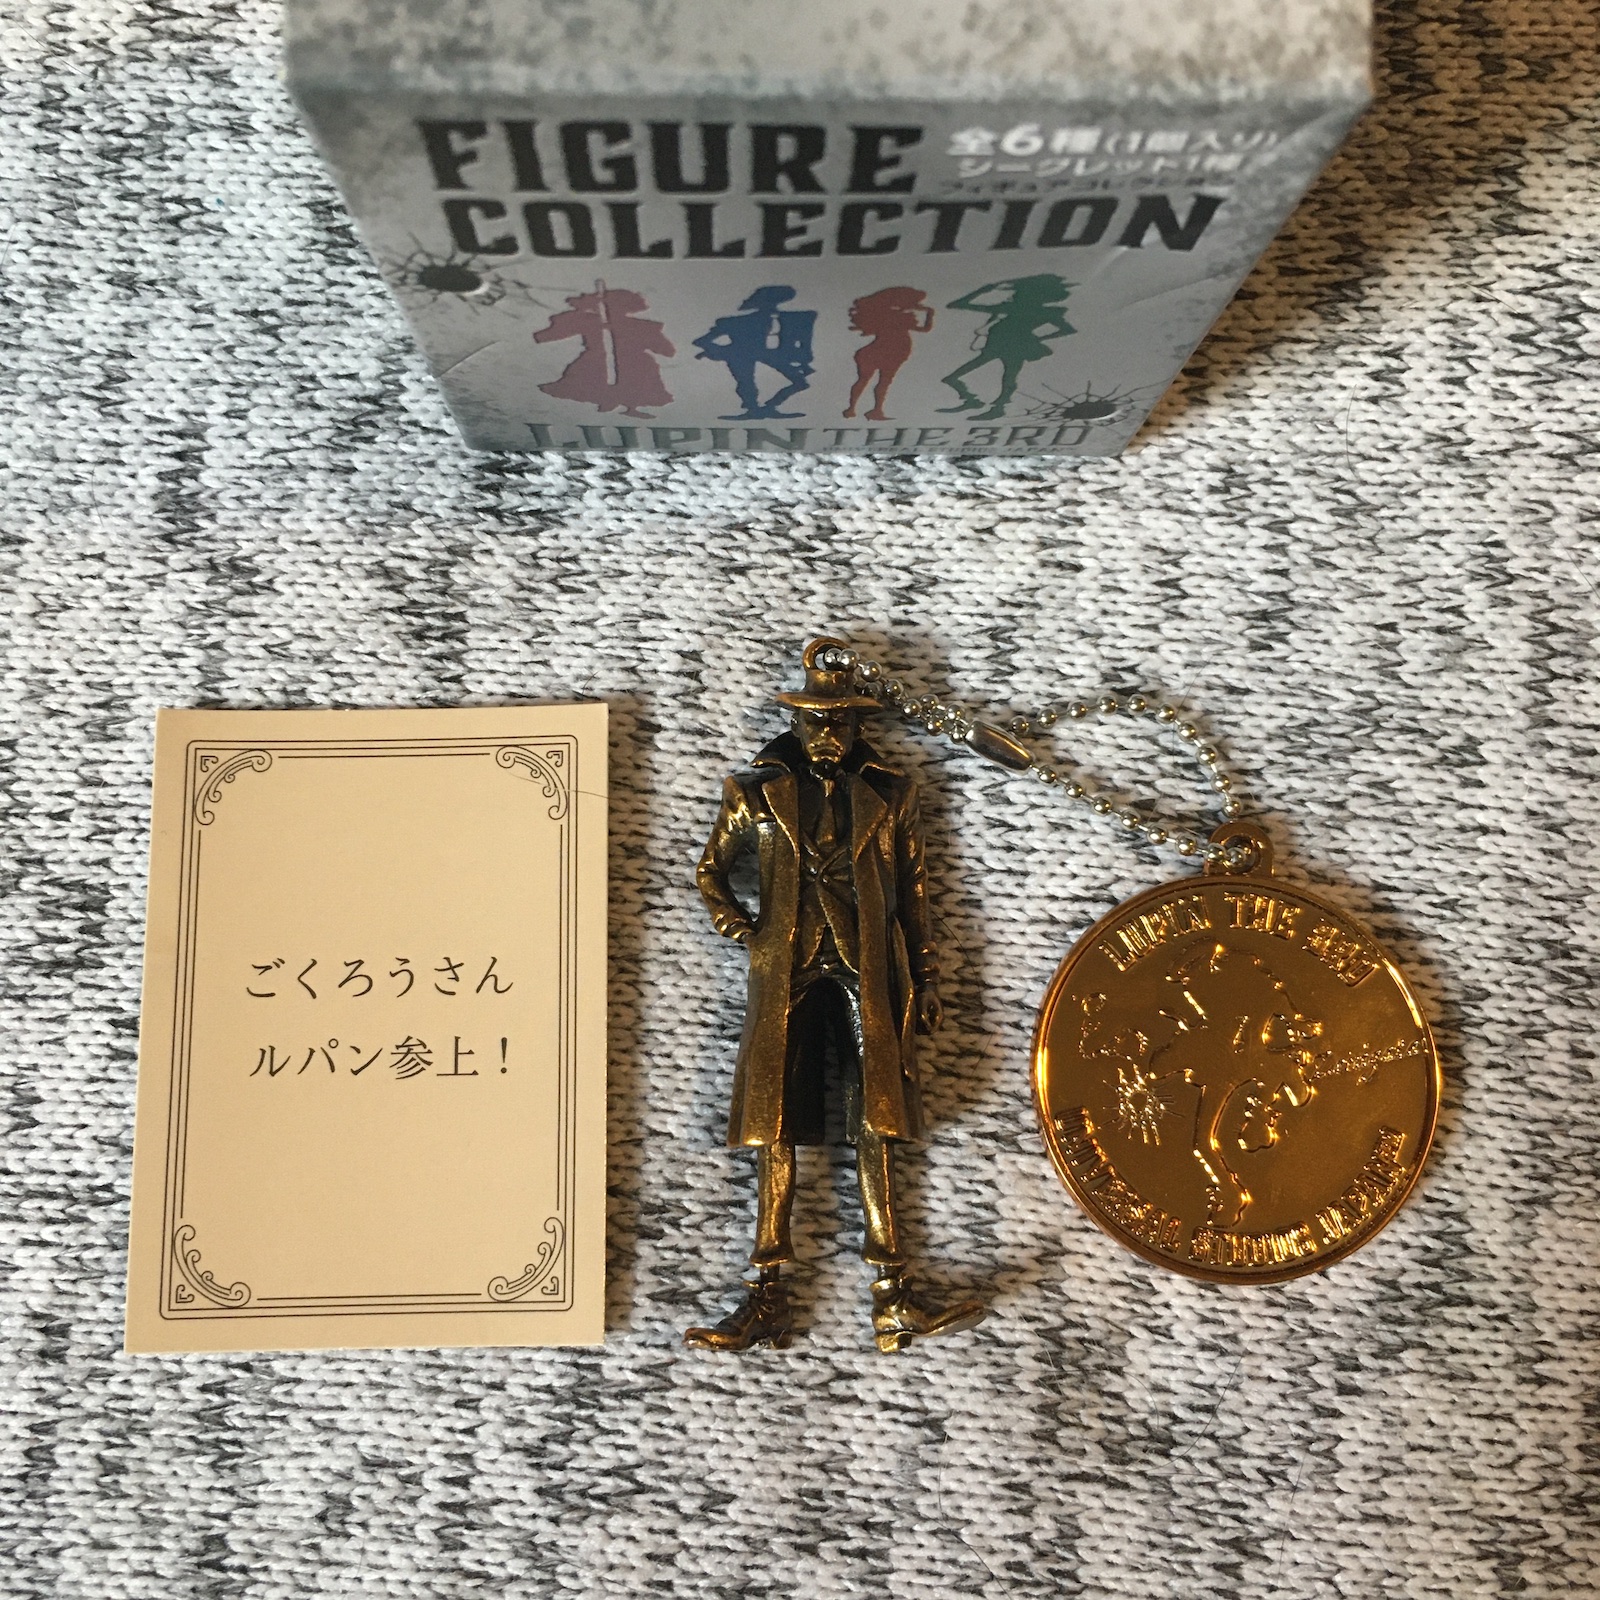 Zenigata metal figure keychain with pendant.